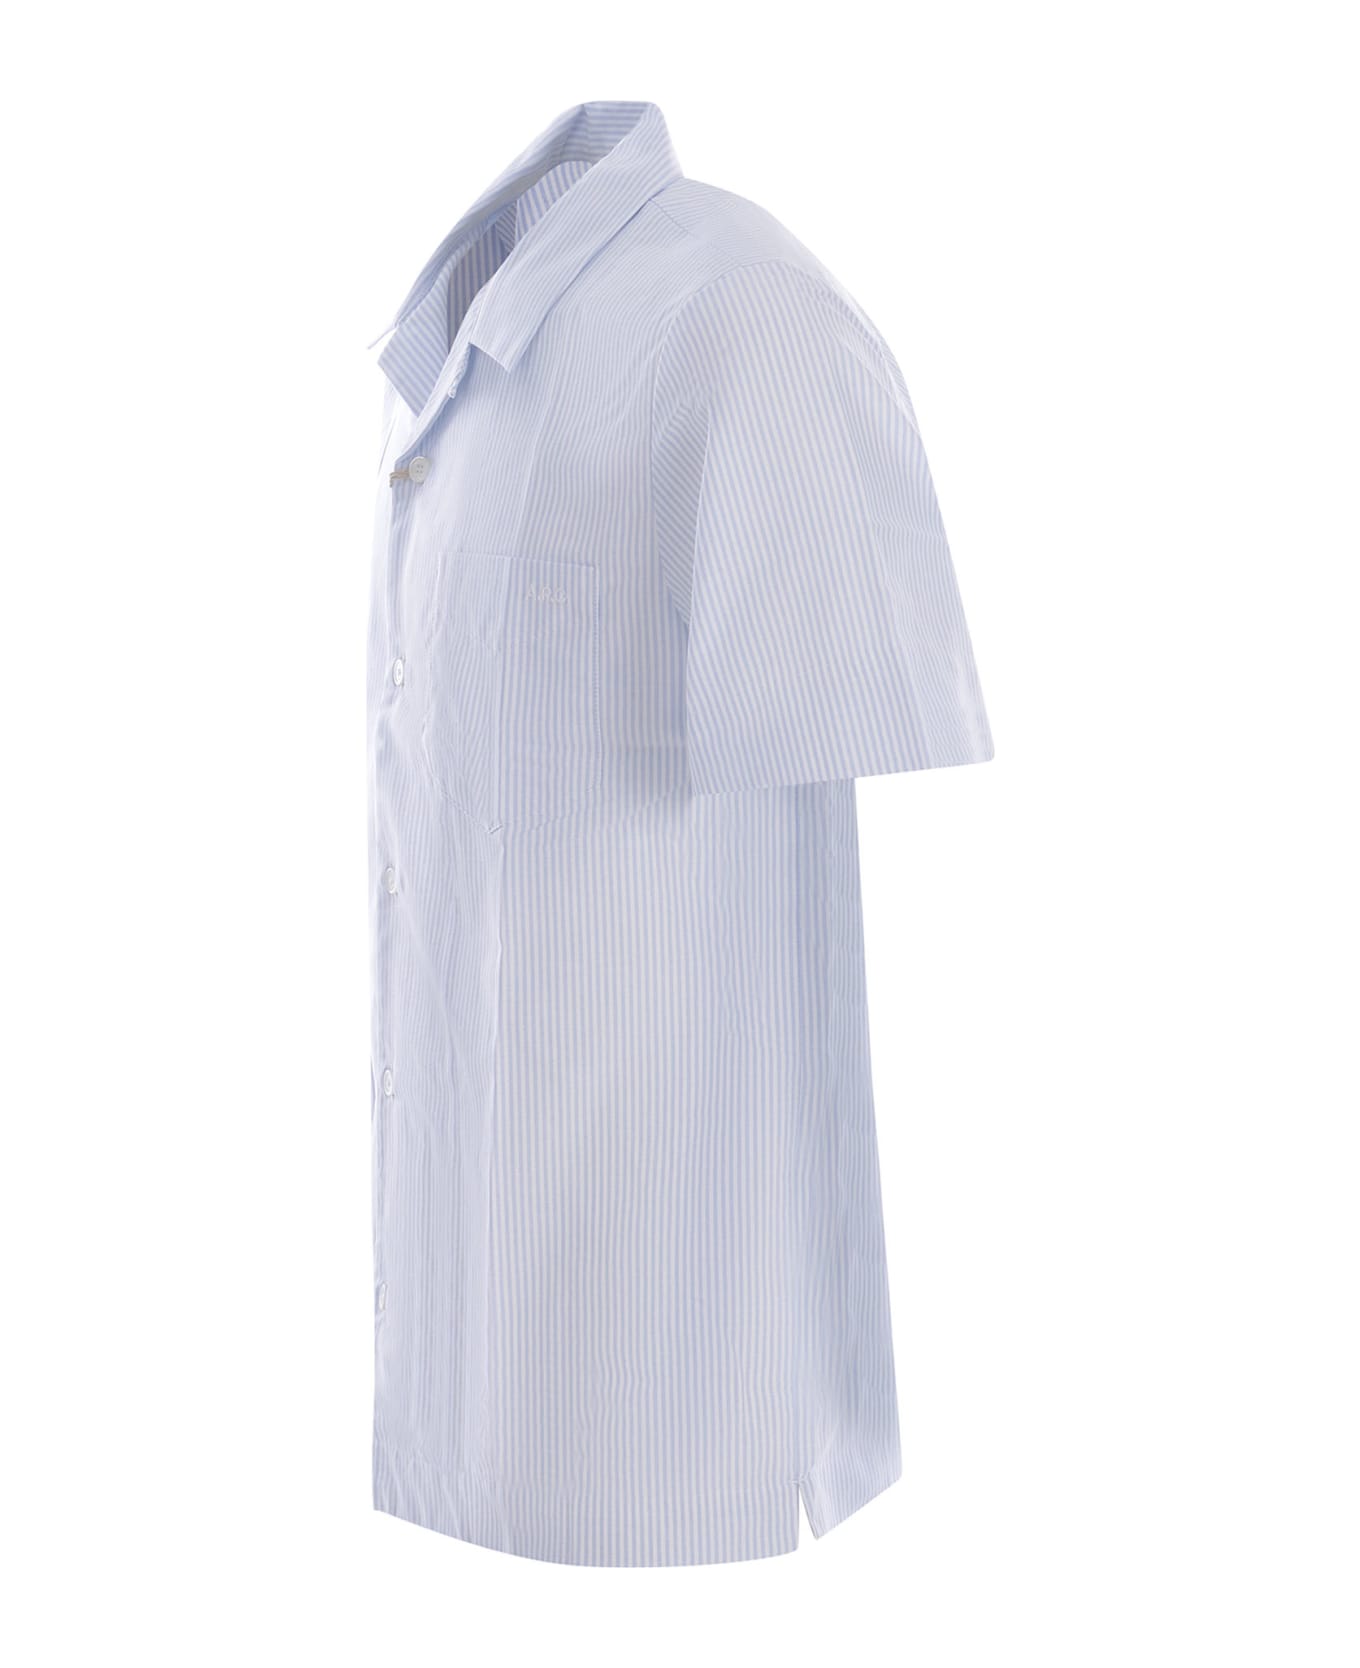 A.P.C. Lloyd Short-sleeved Striped Shirt - Bianco